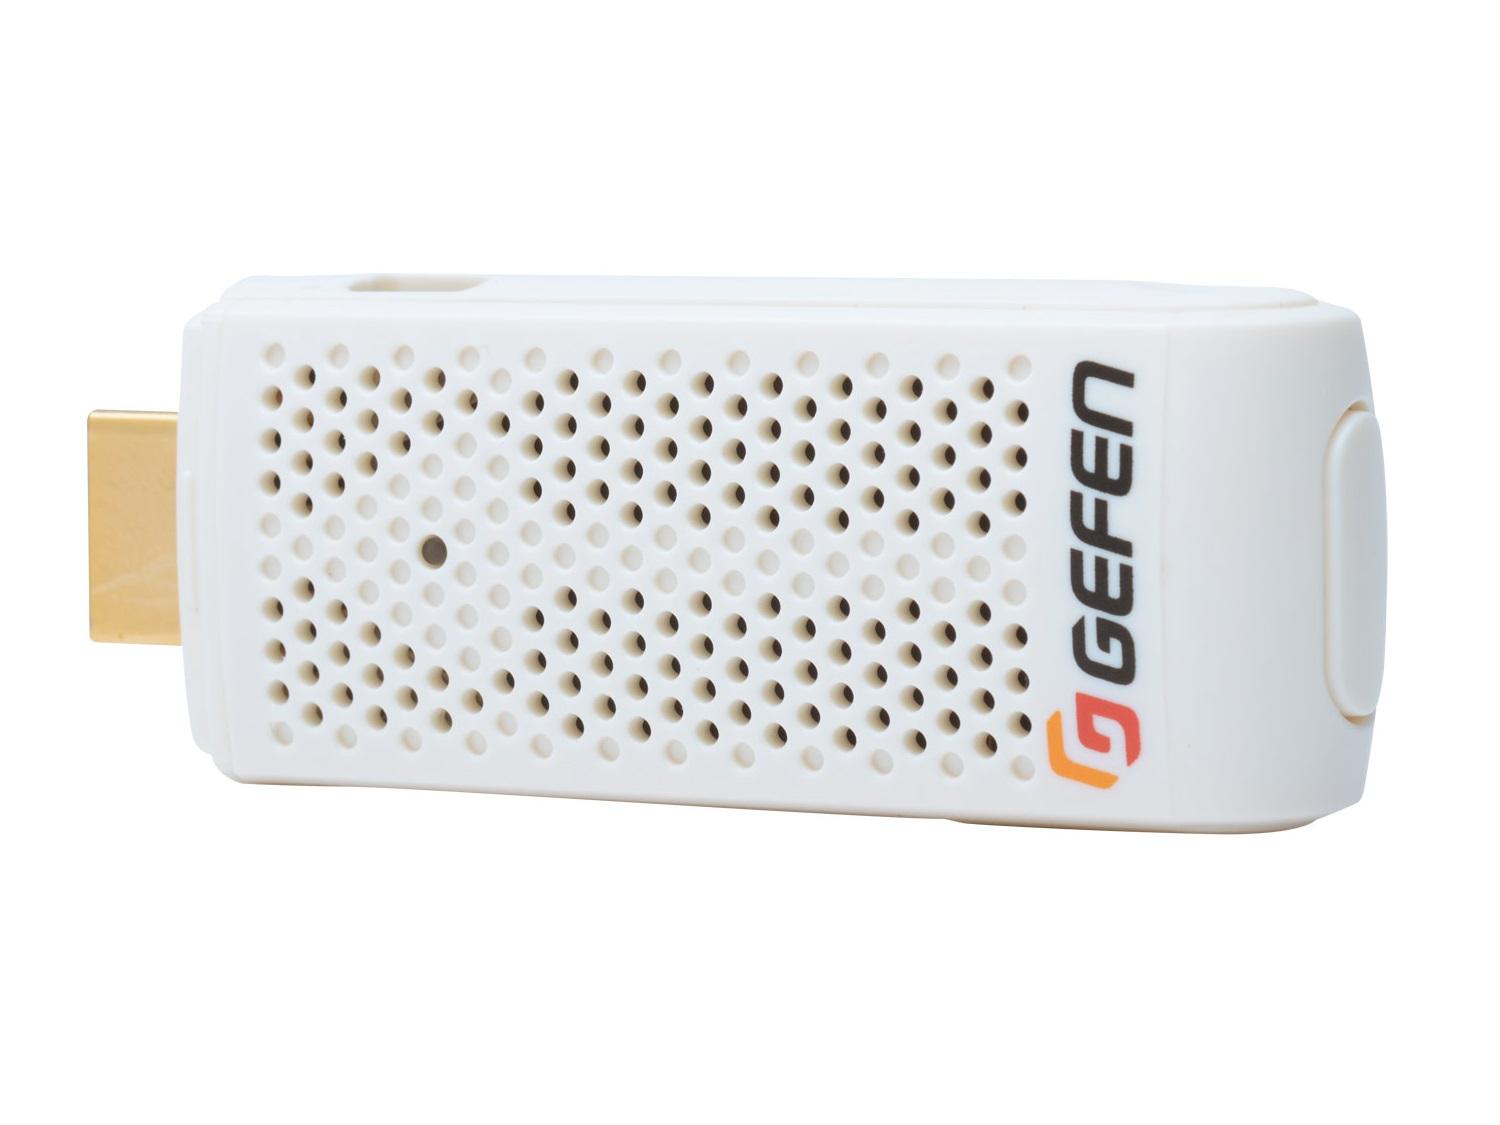 EXT-WHD-1080P-SR-TX-b Wireless Extender (Transmitter) for HDMI Short Range by Gefen